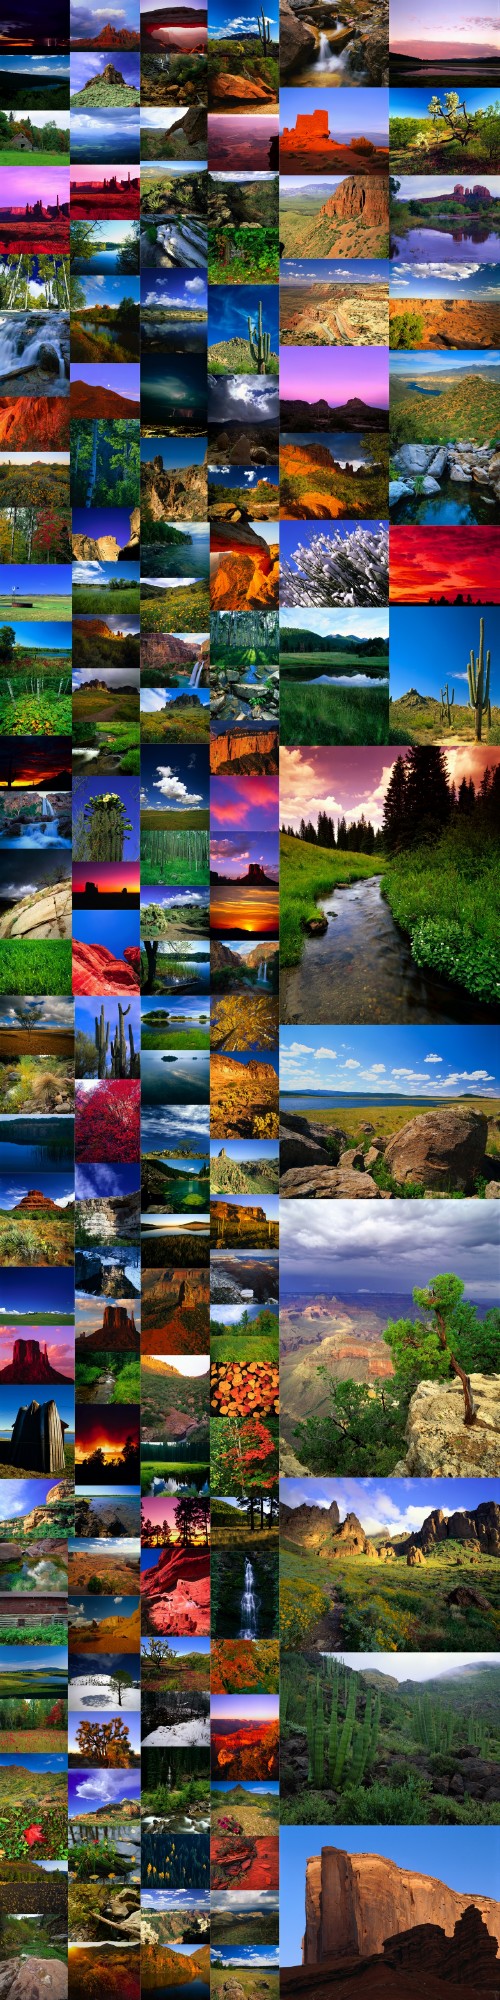 Stock Photos - Magnificent Landscapes